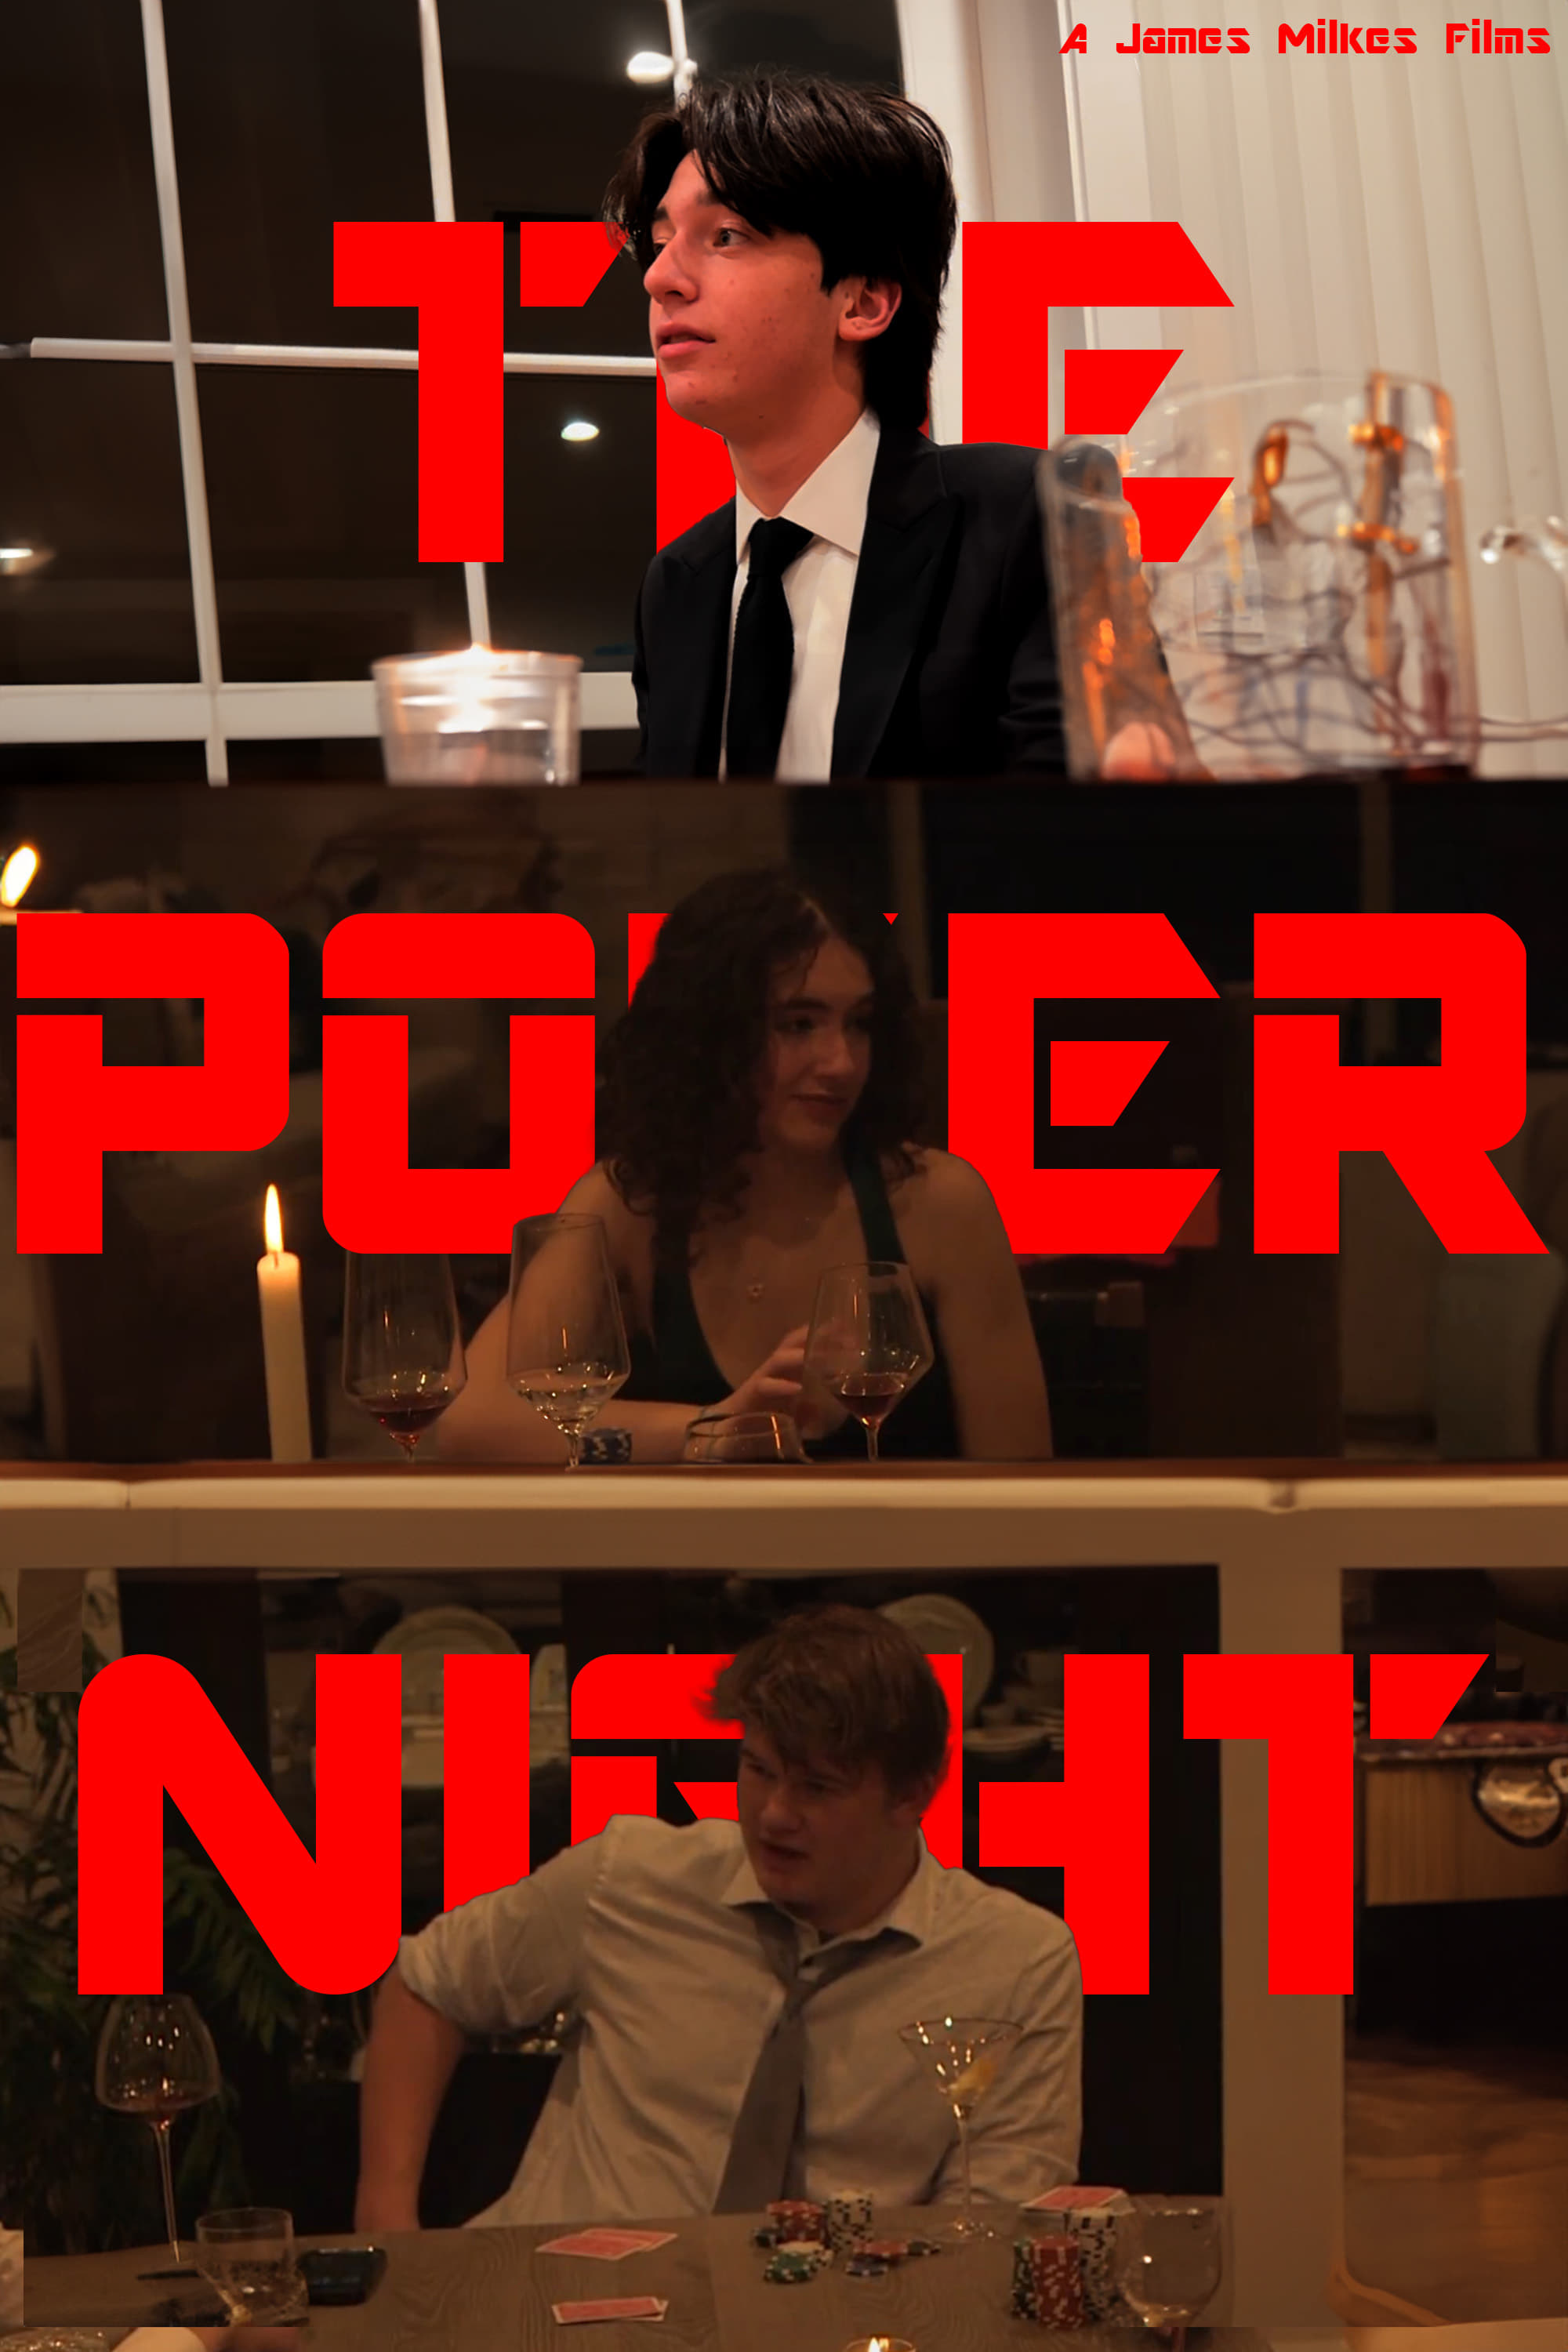 The Poker Night